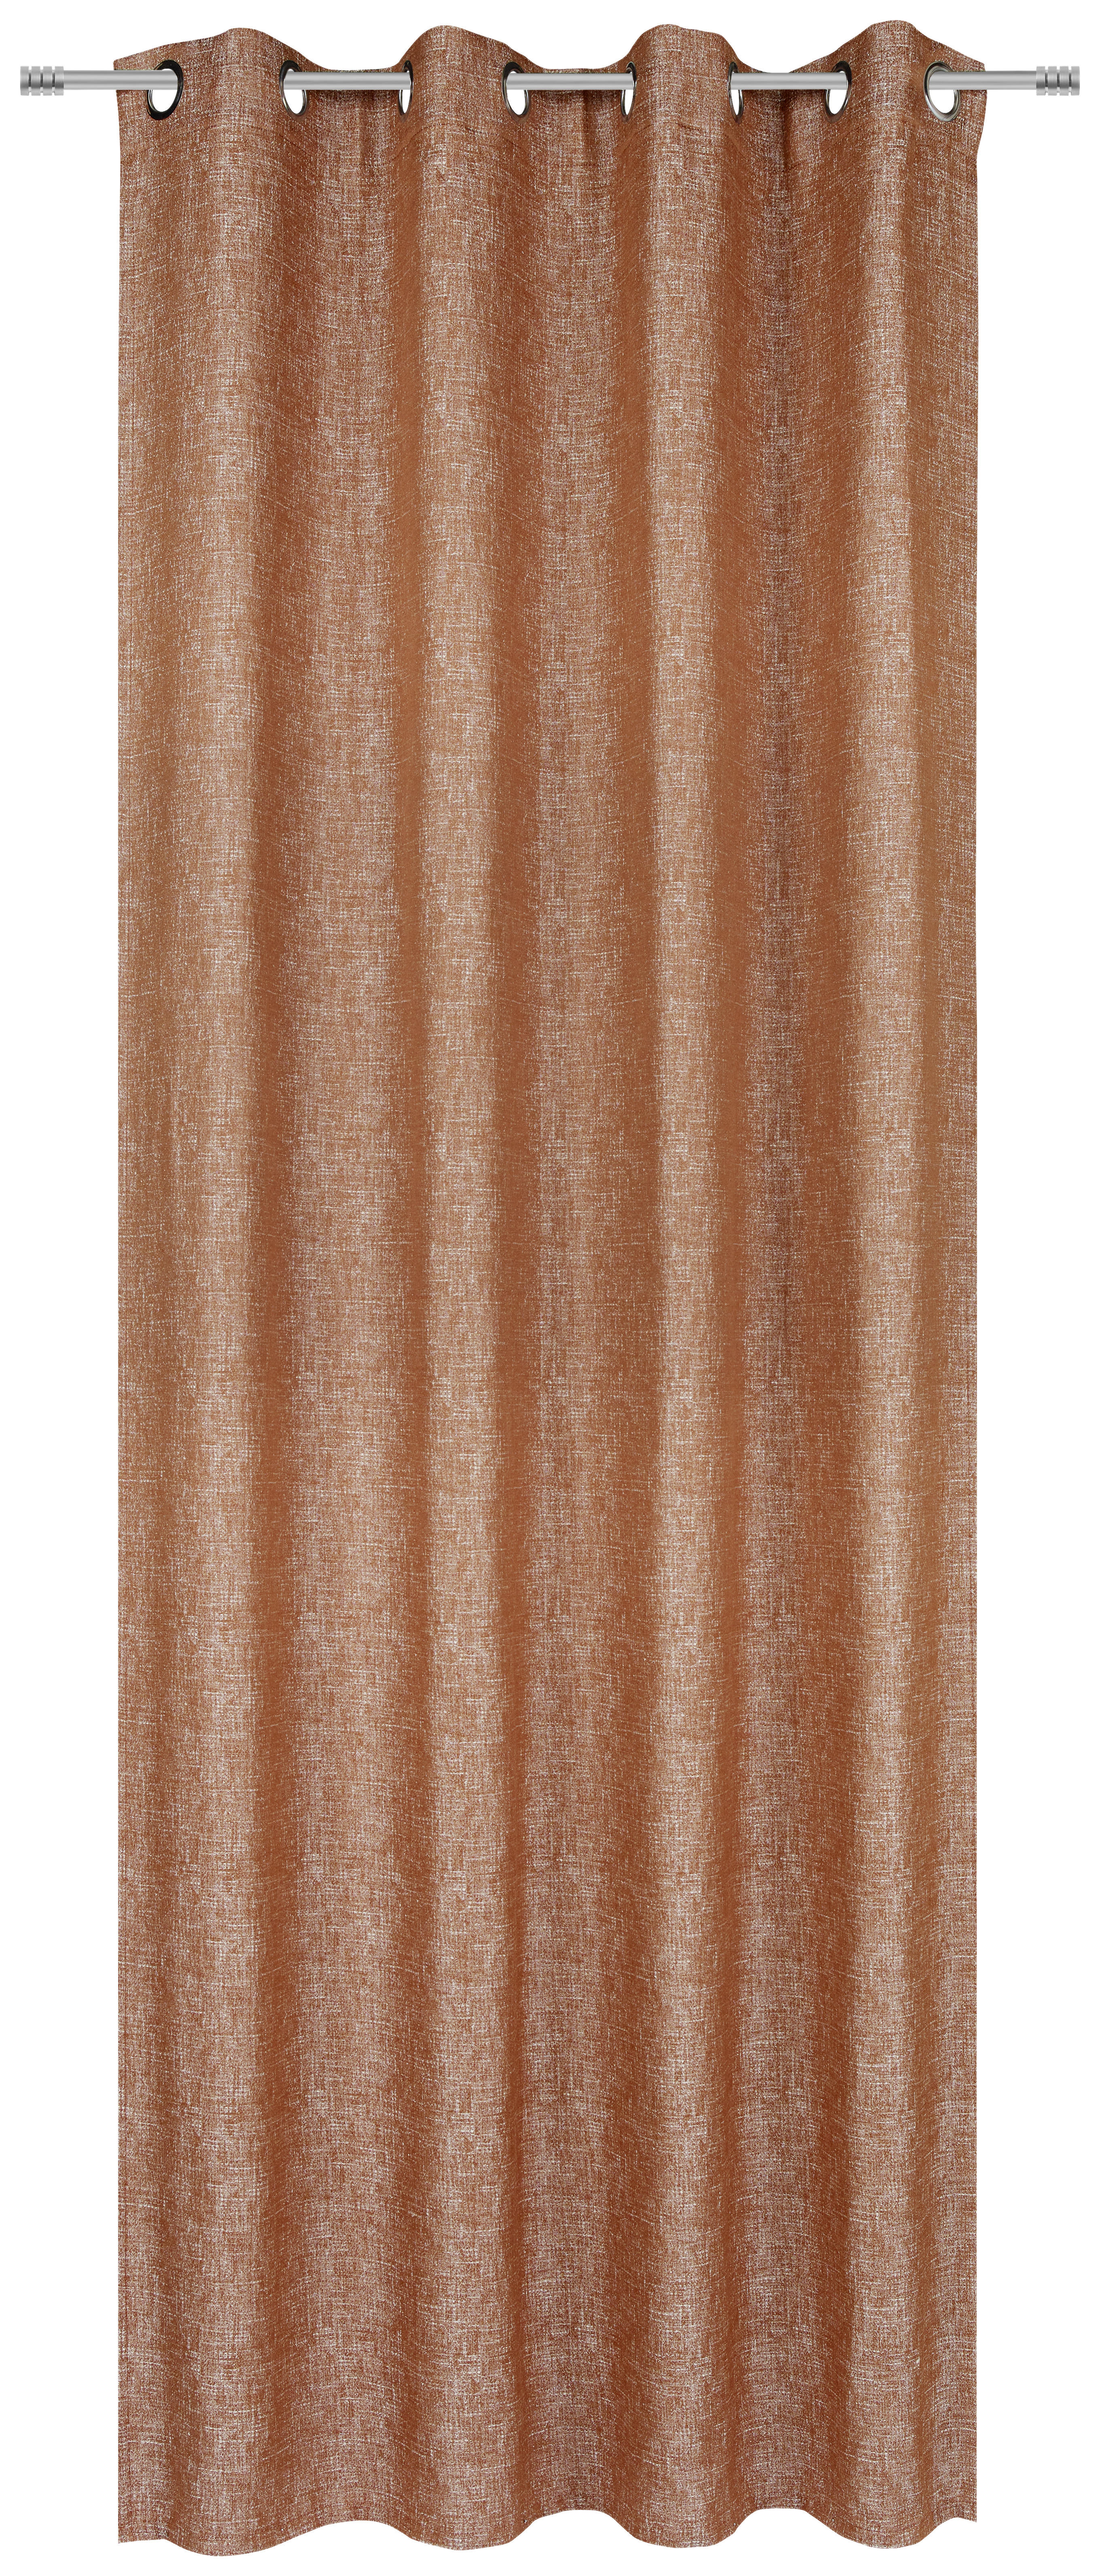 ÖSENSCHAL Gent blickdicht 135/250 cm   - Terra cotta, Design, Textil (135/250cm) - Ambiente